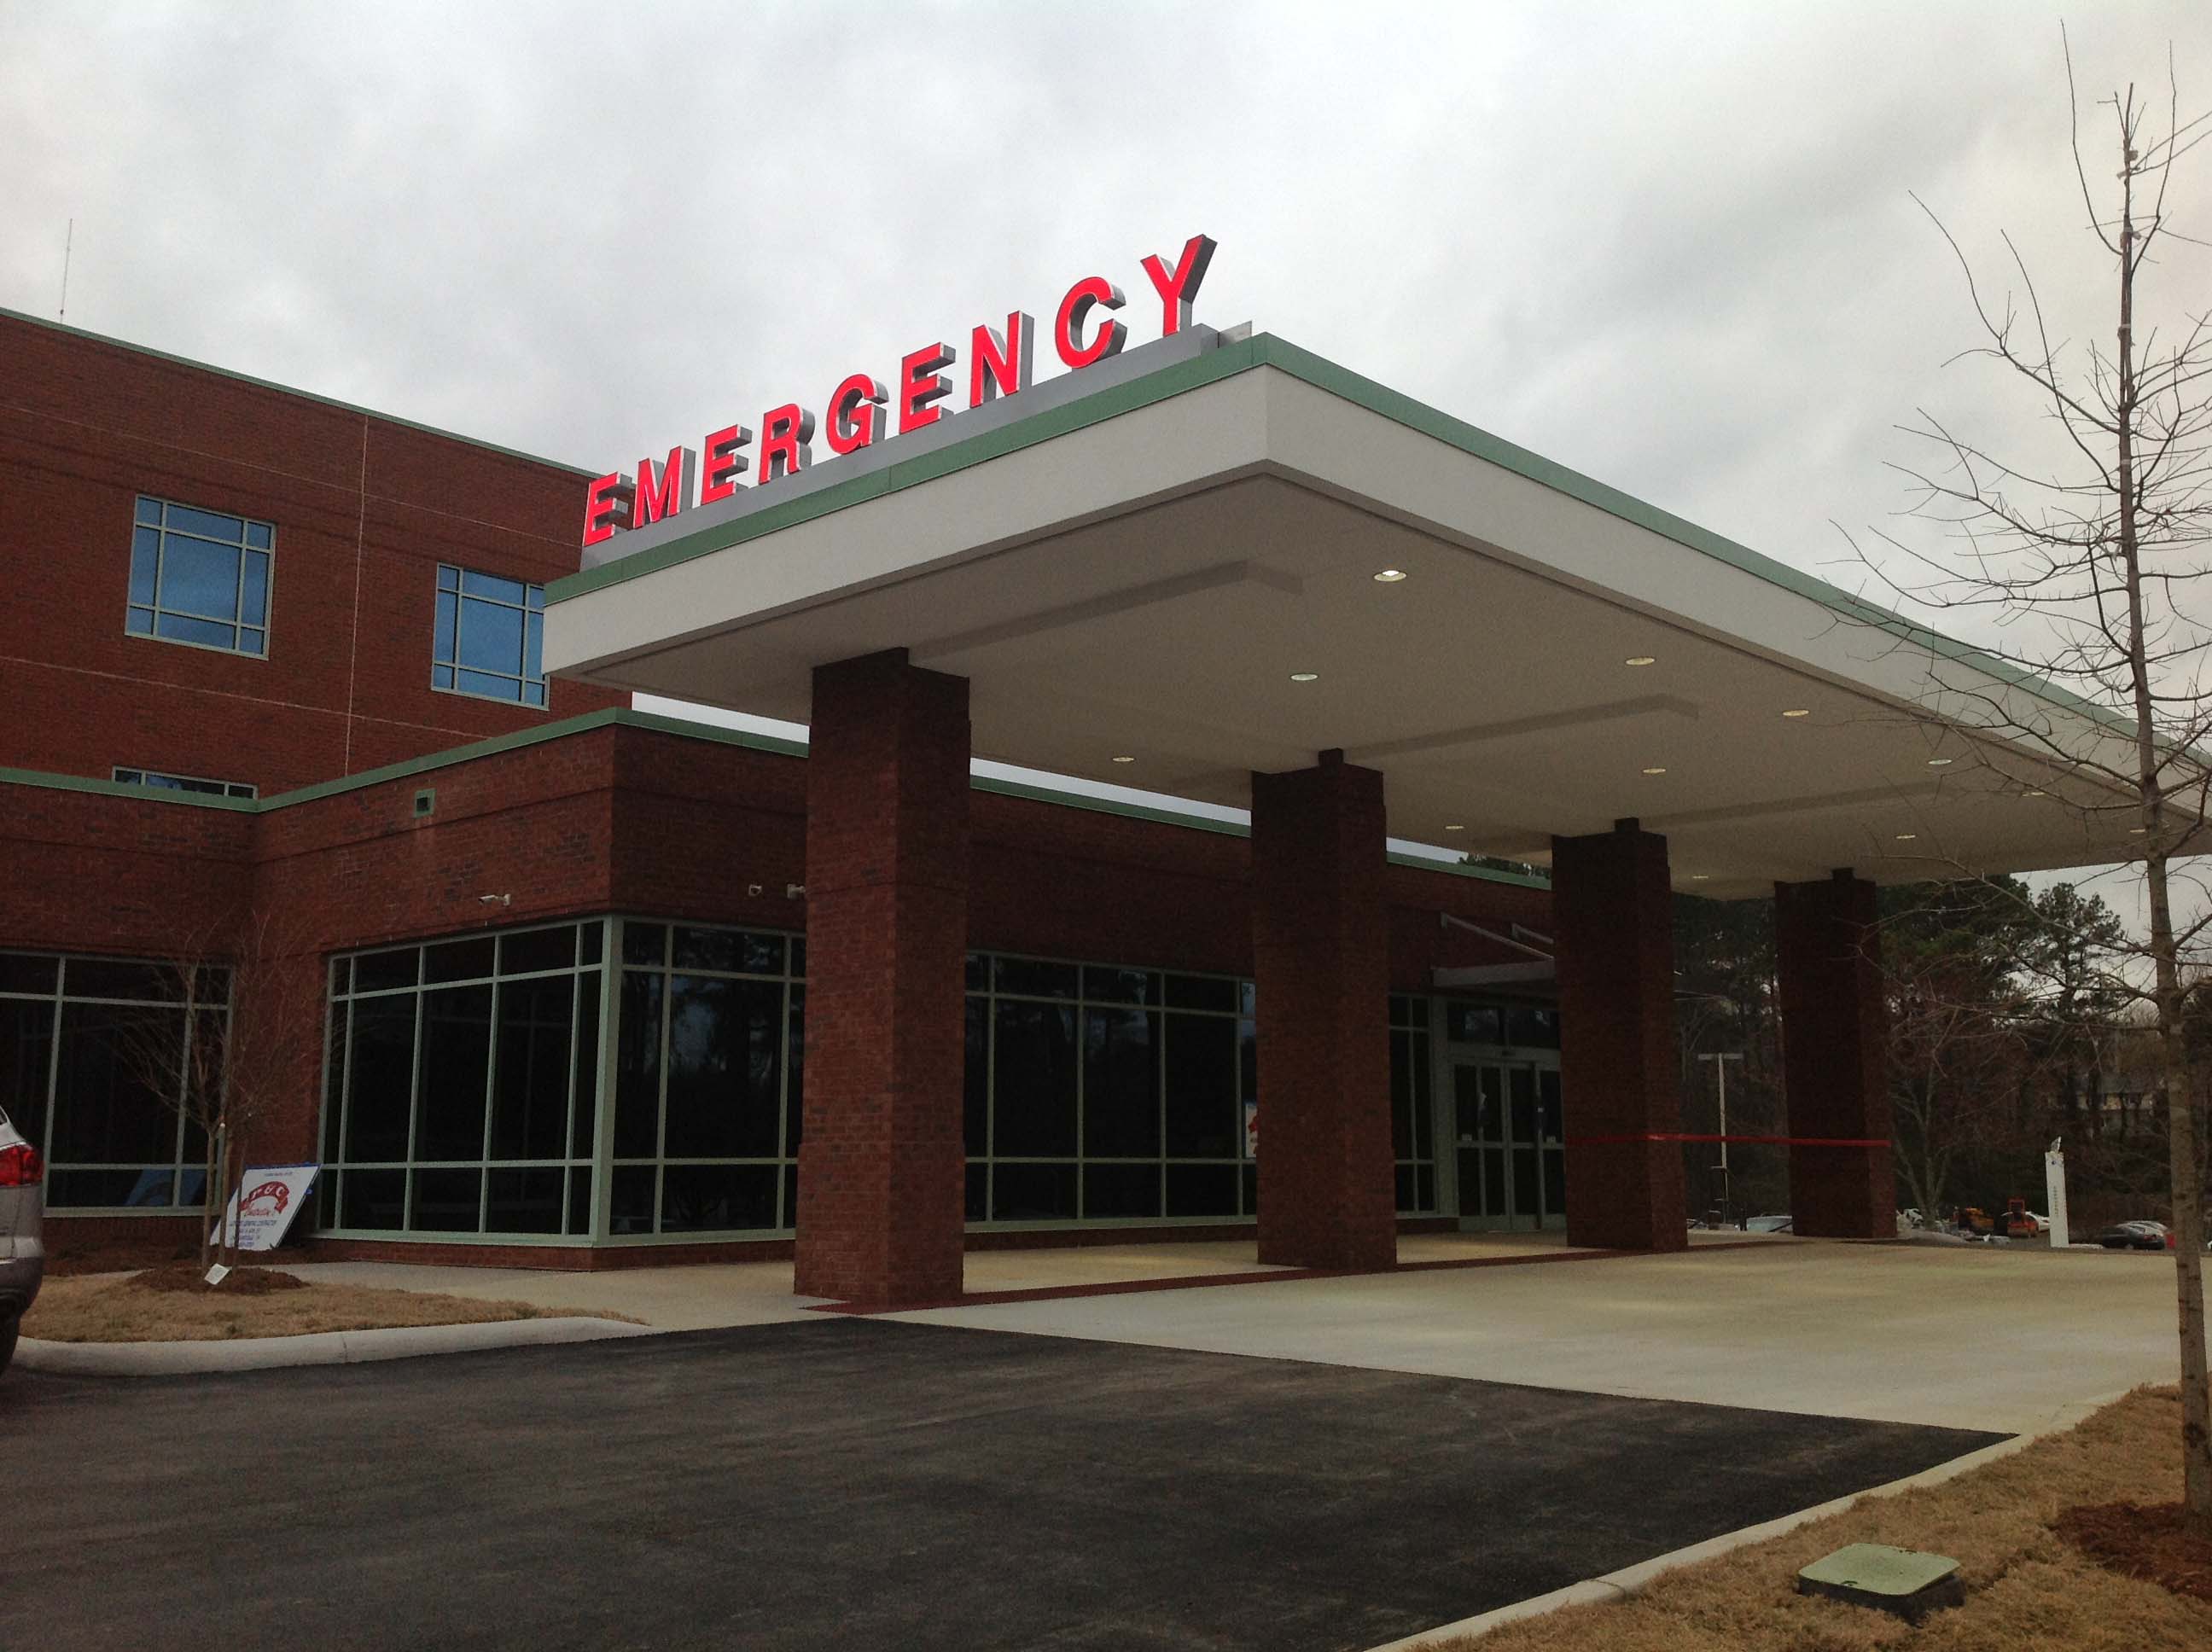 Erlanger opens new Emergency Center to serve East Hamilton community